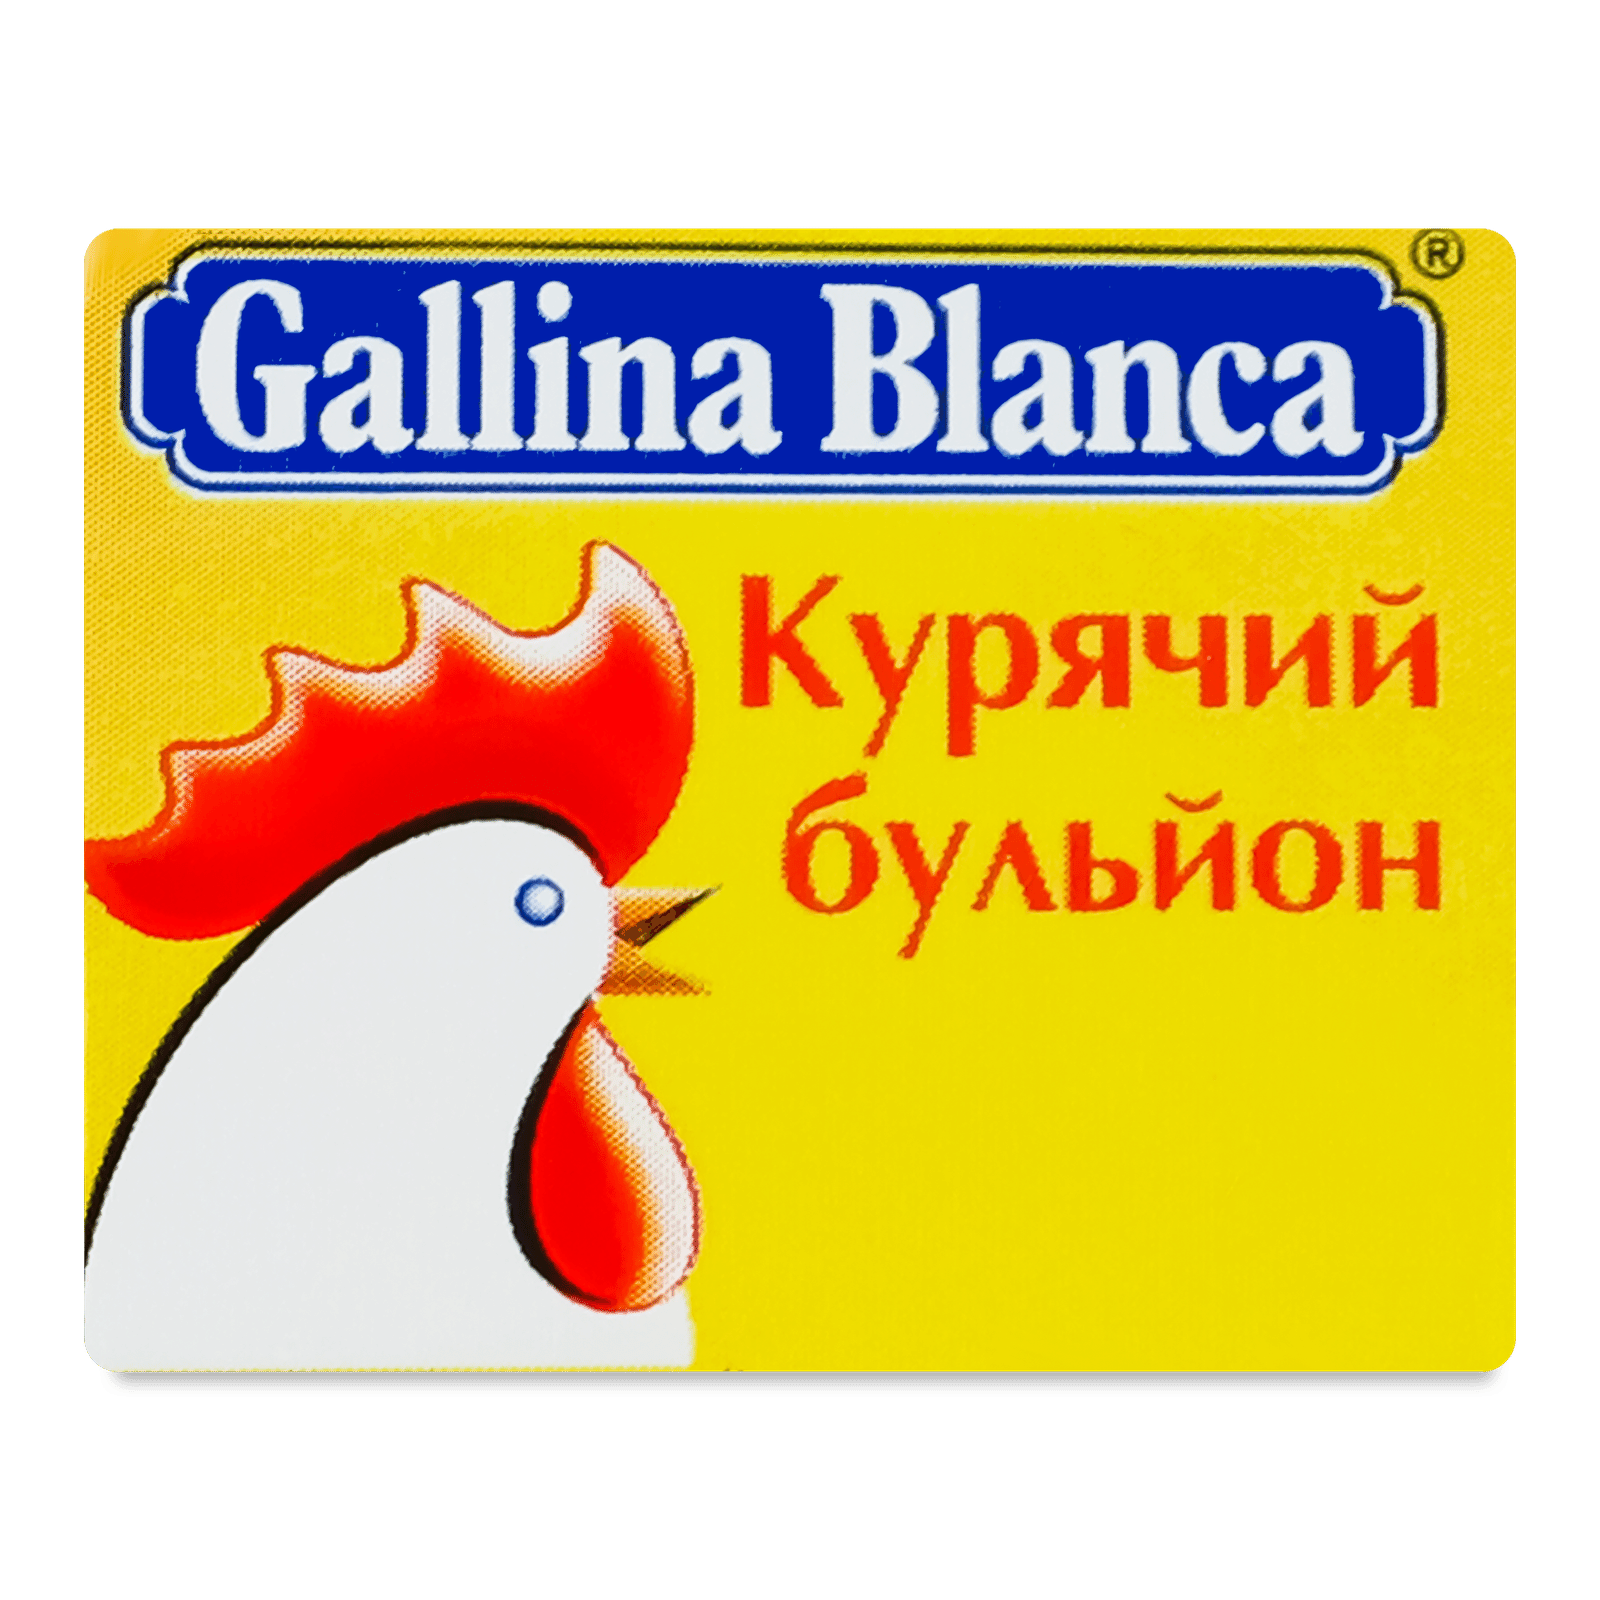 Бульйон Gallina Blanca курячий - 1